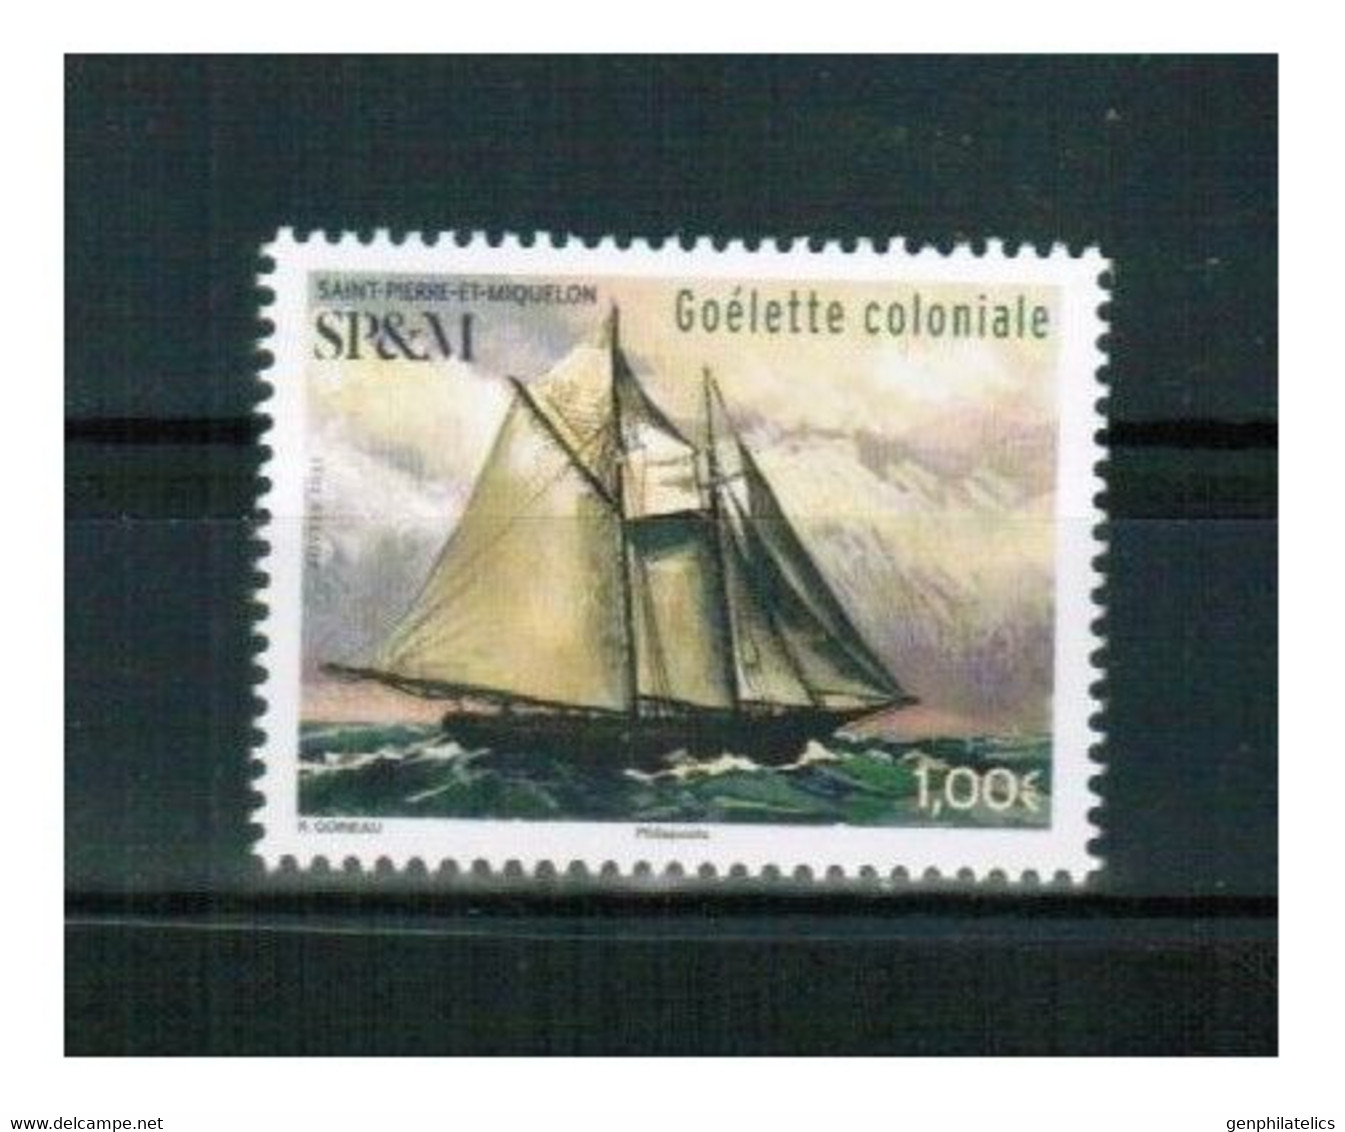 SP&M 2021 FAUNA Vehicles SHIP - Fine Stamp MNH - Neufs